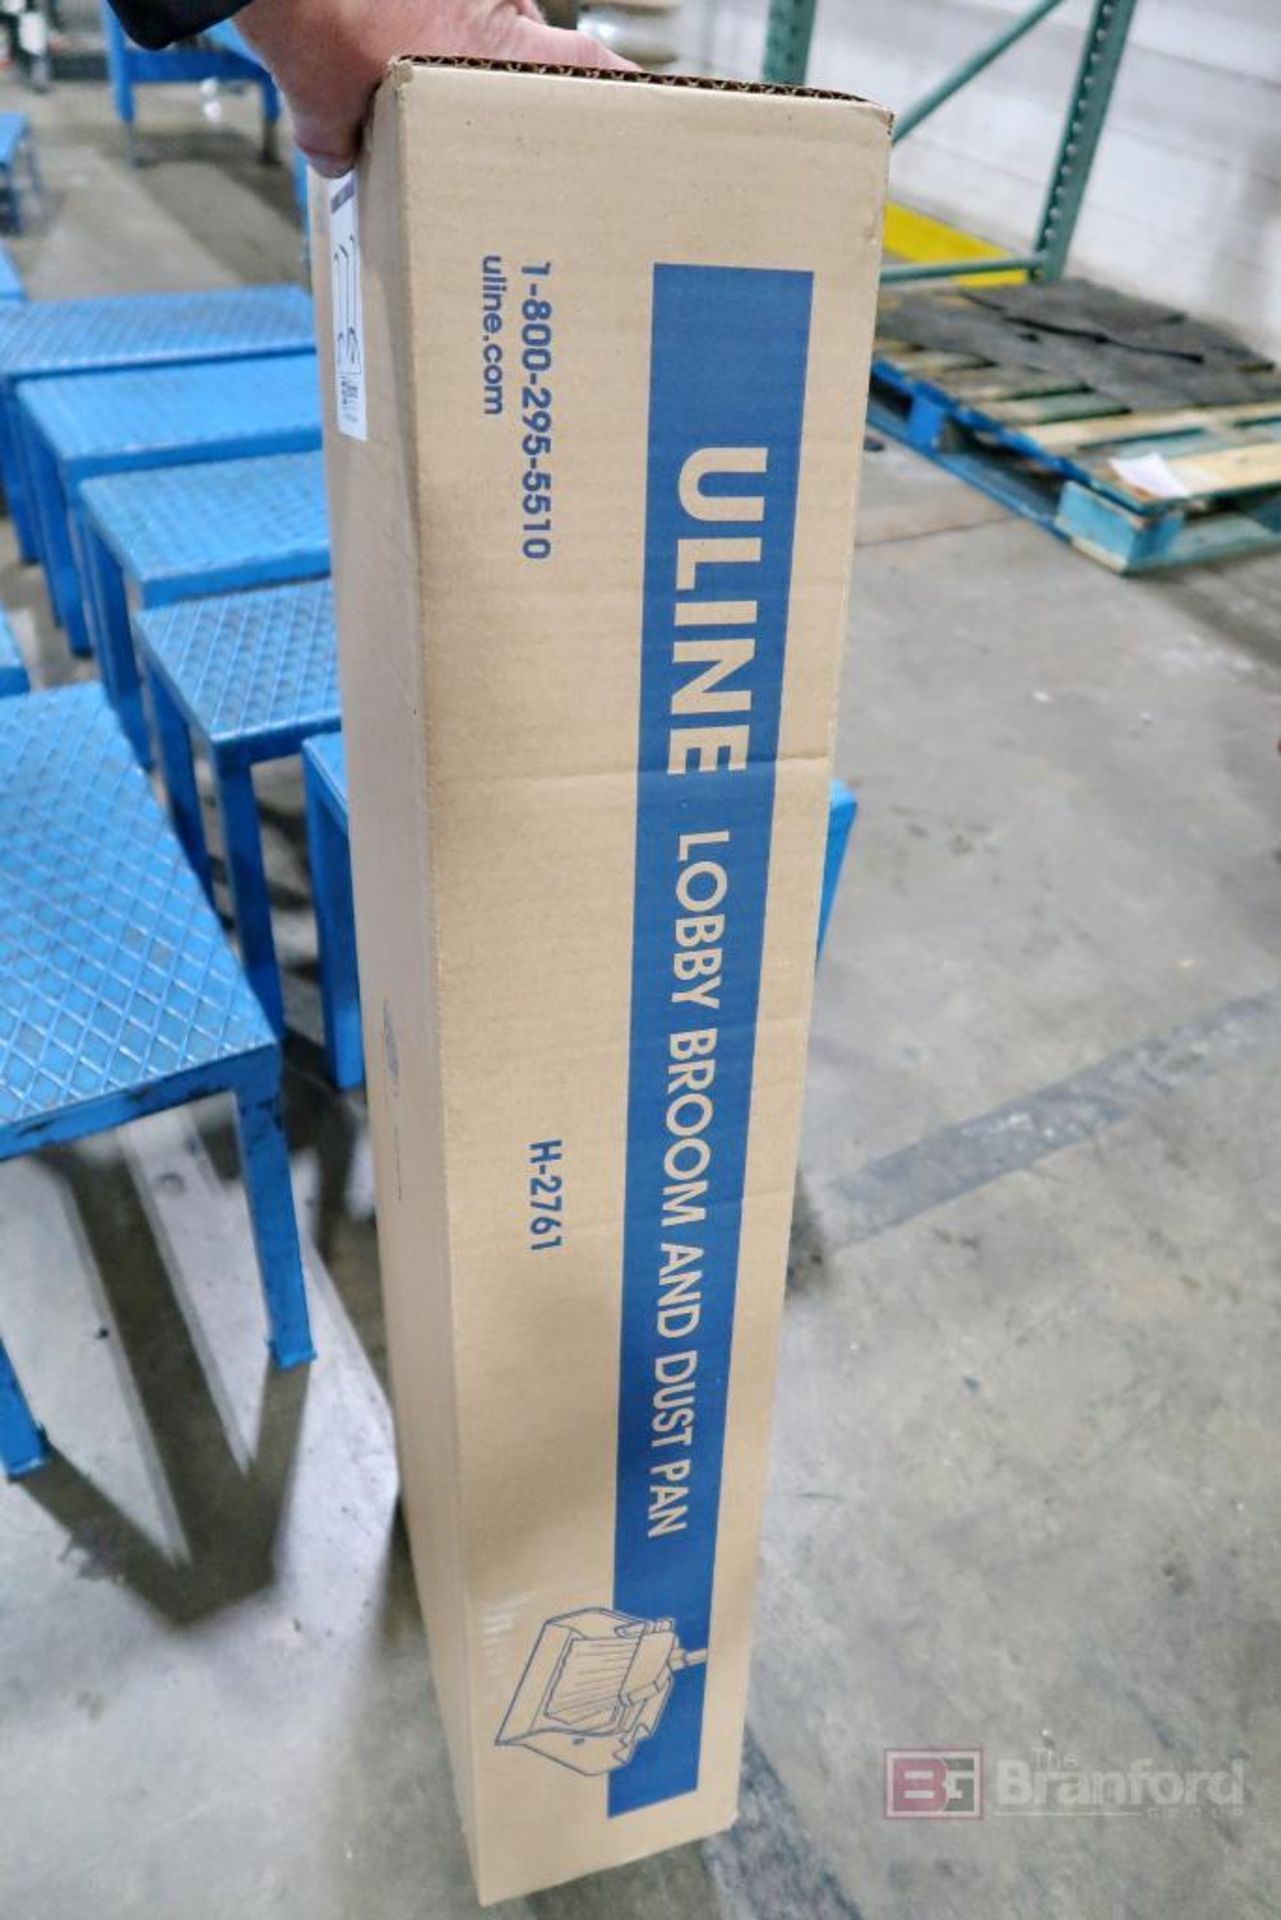 Uline Lobby Broom And Dust Pan H-2761 - Image 2 of 2